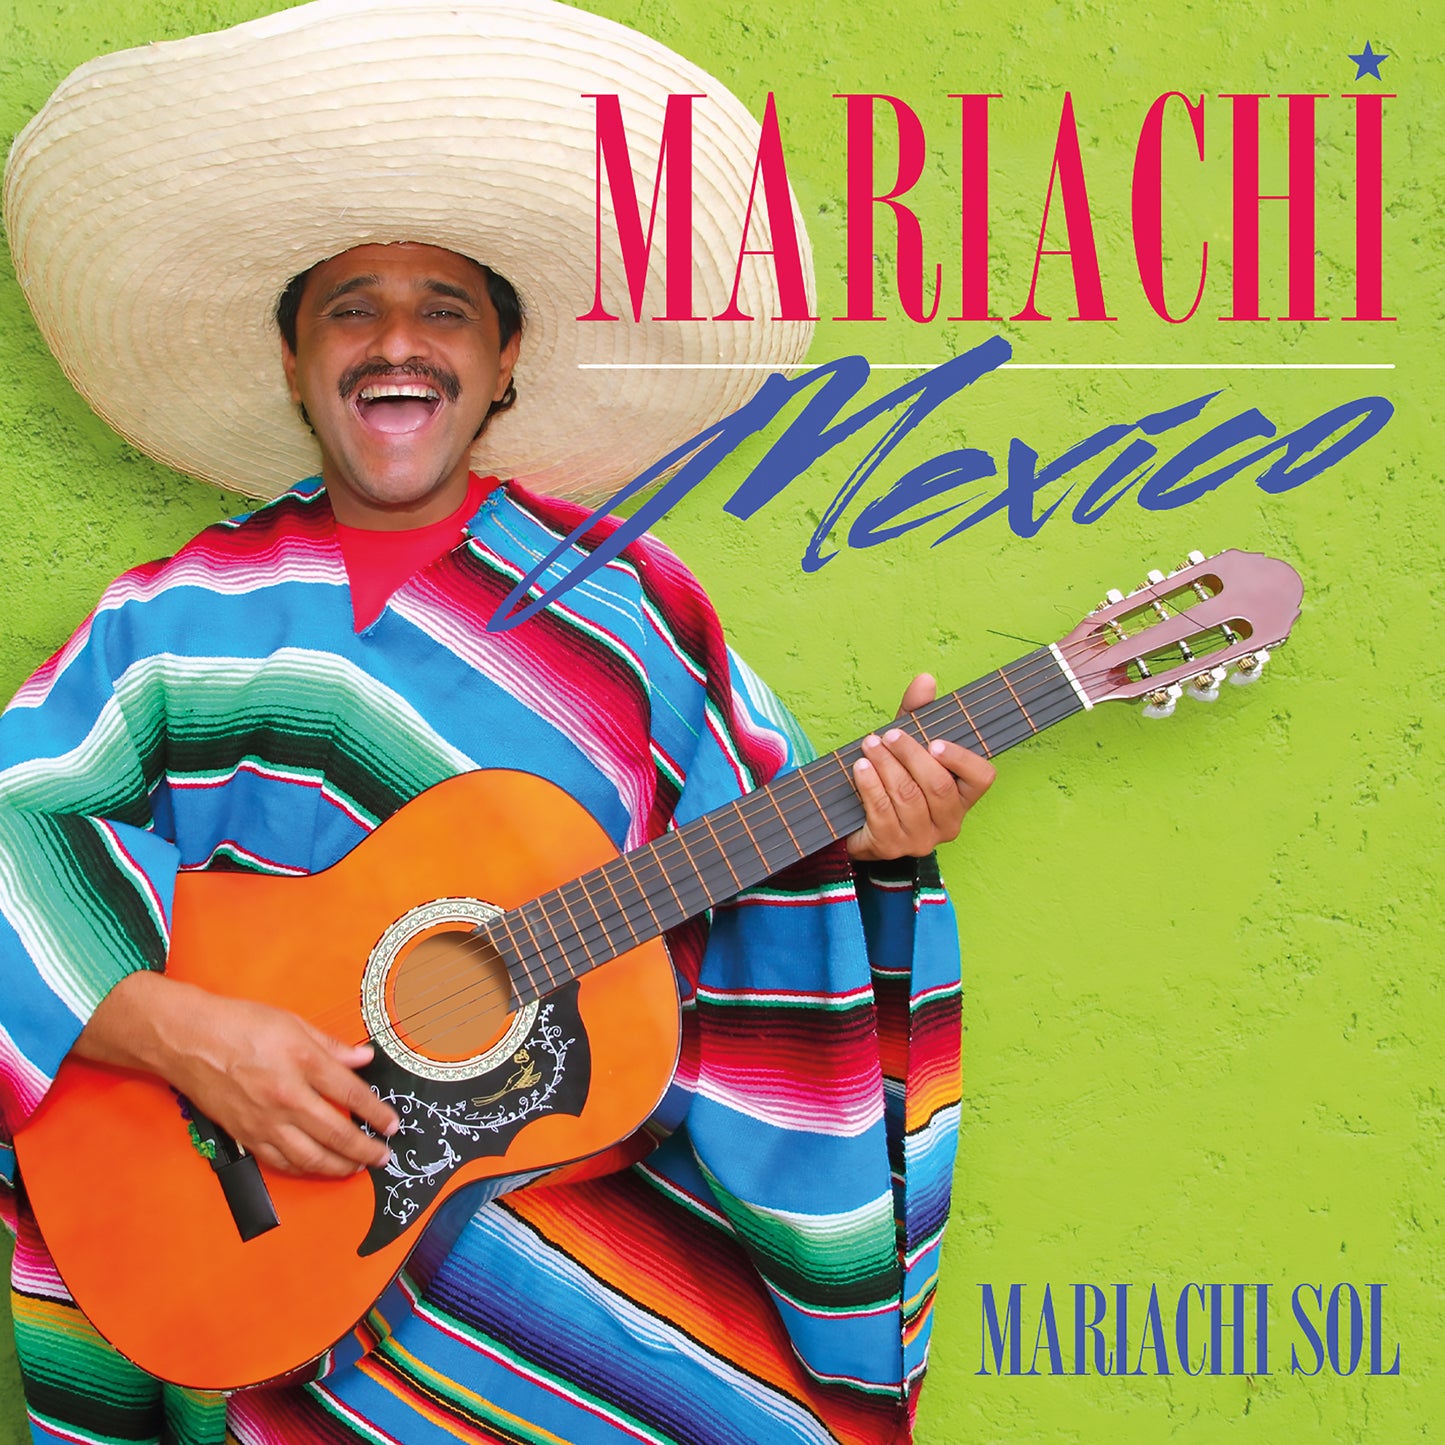 Mariachi Mexico / Mariachi Sol